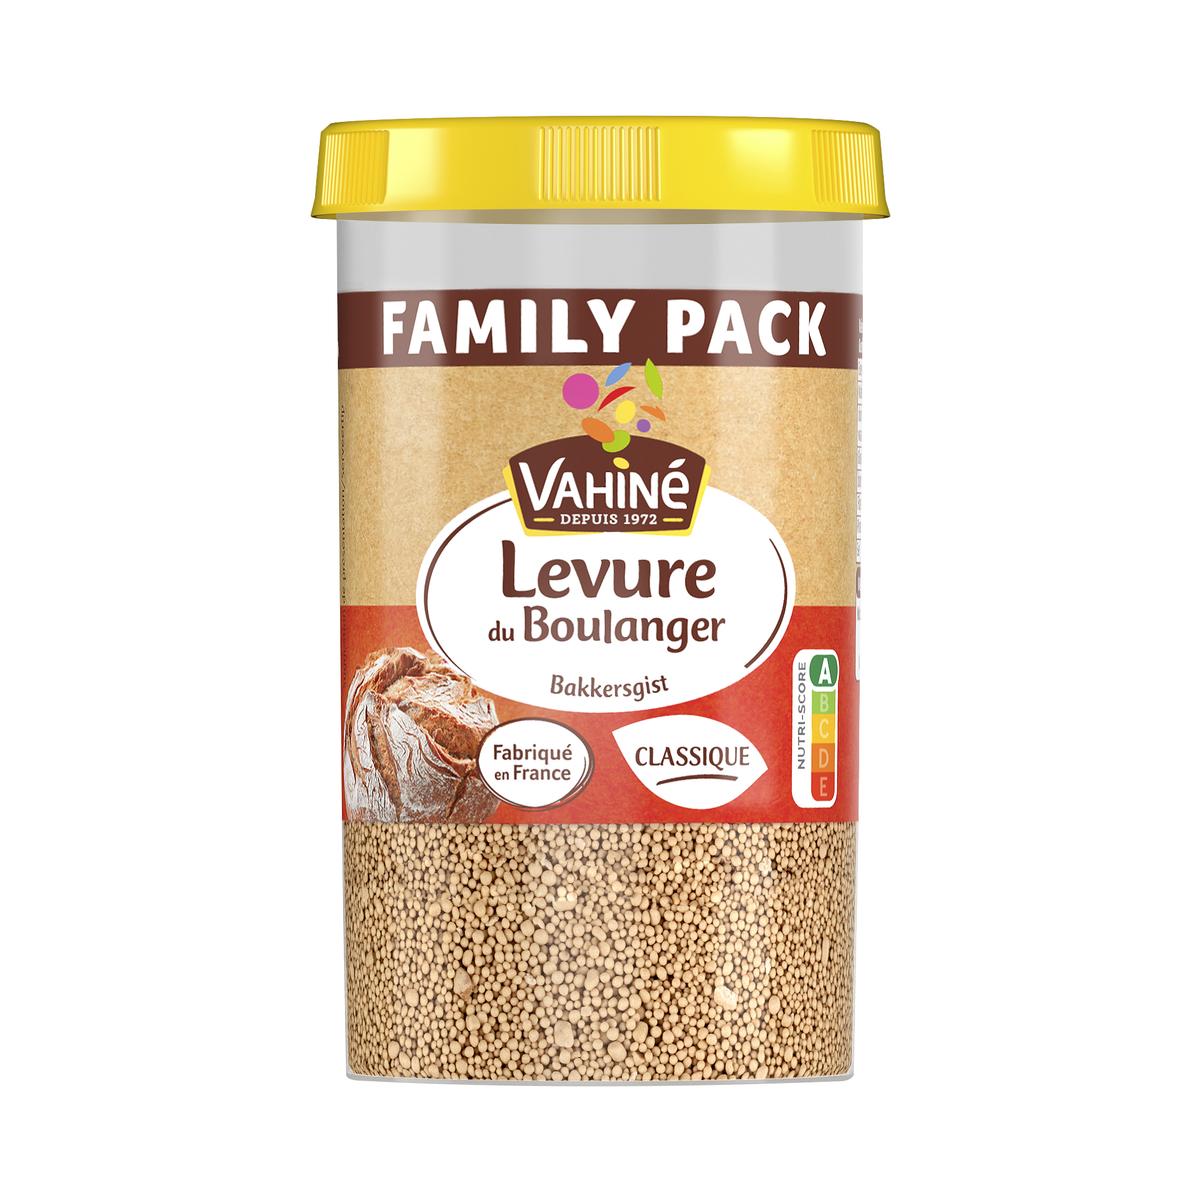 Achat / Vente Promotion Vahine Family pack levure du boulanger, 150g